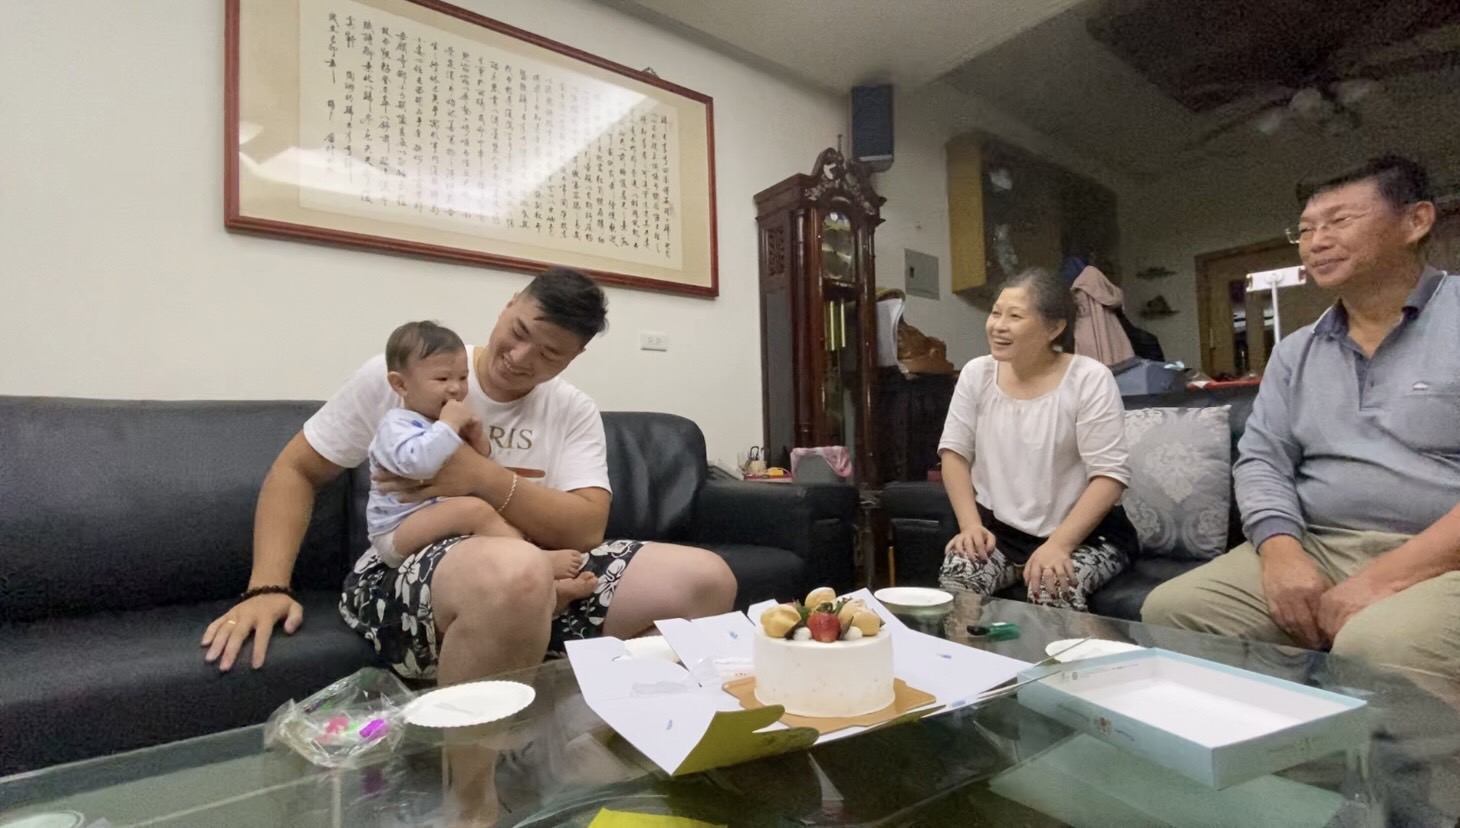 Mereka memtusukan untuk pindah ke Taiwan setelah menikah. Keberadaan orang tua sang suami juga sangat membahagiakan.  Sumber: foto dilampirkan dengan izin dari @Somethingabouttaiwan